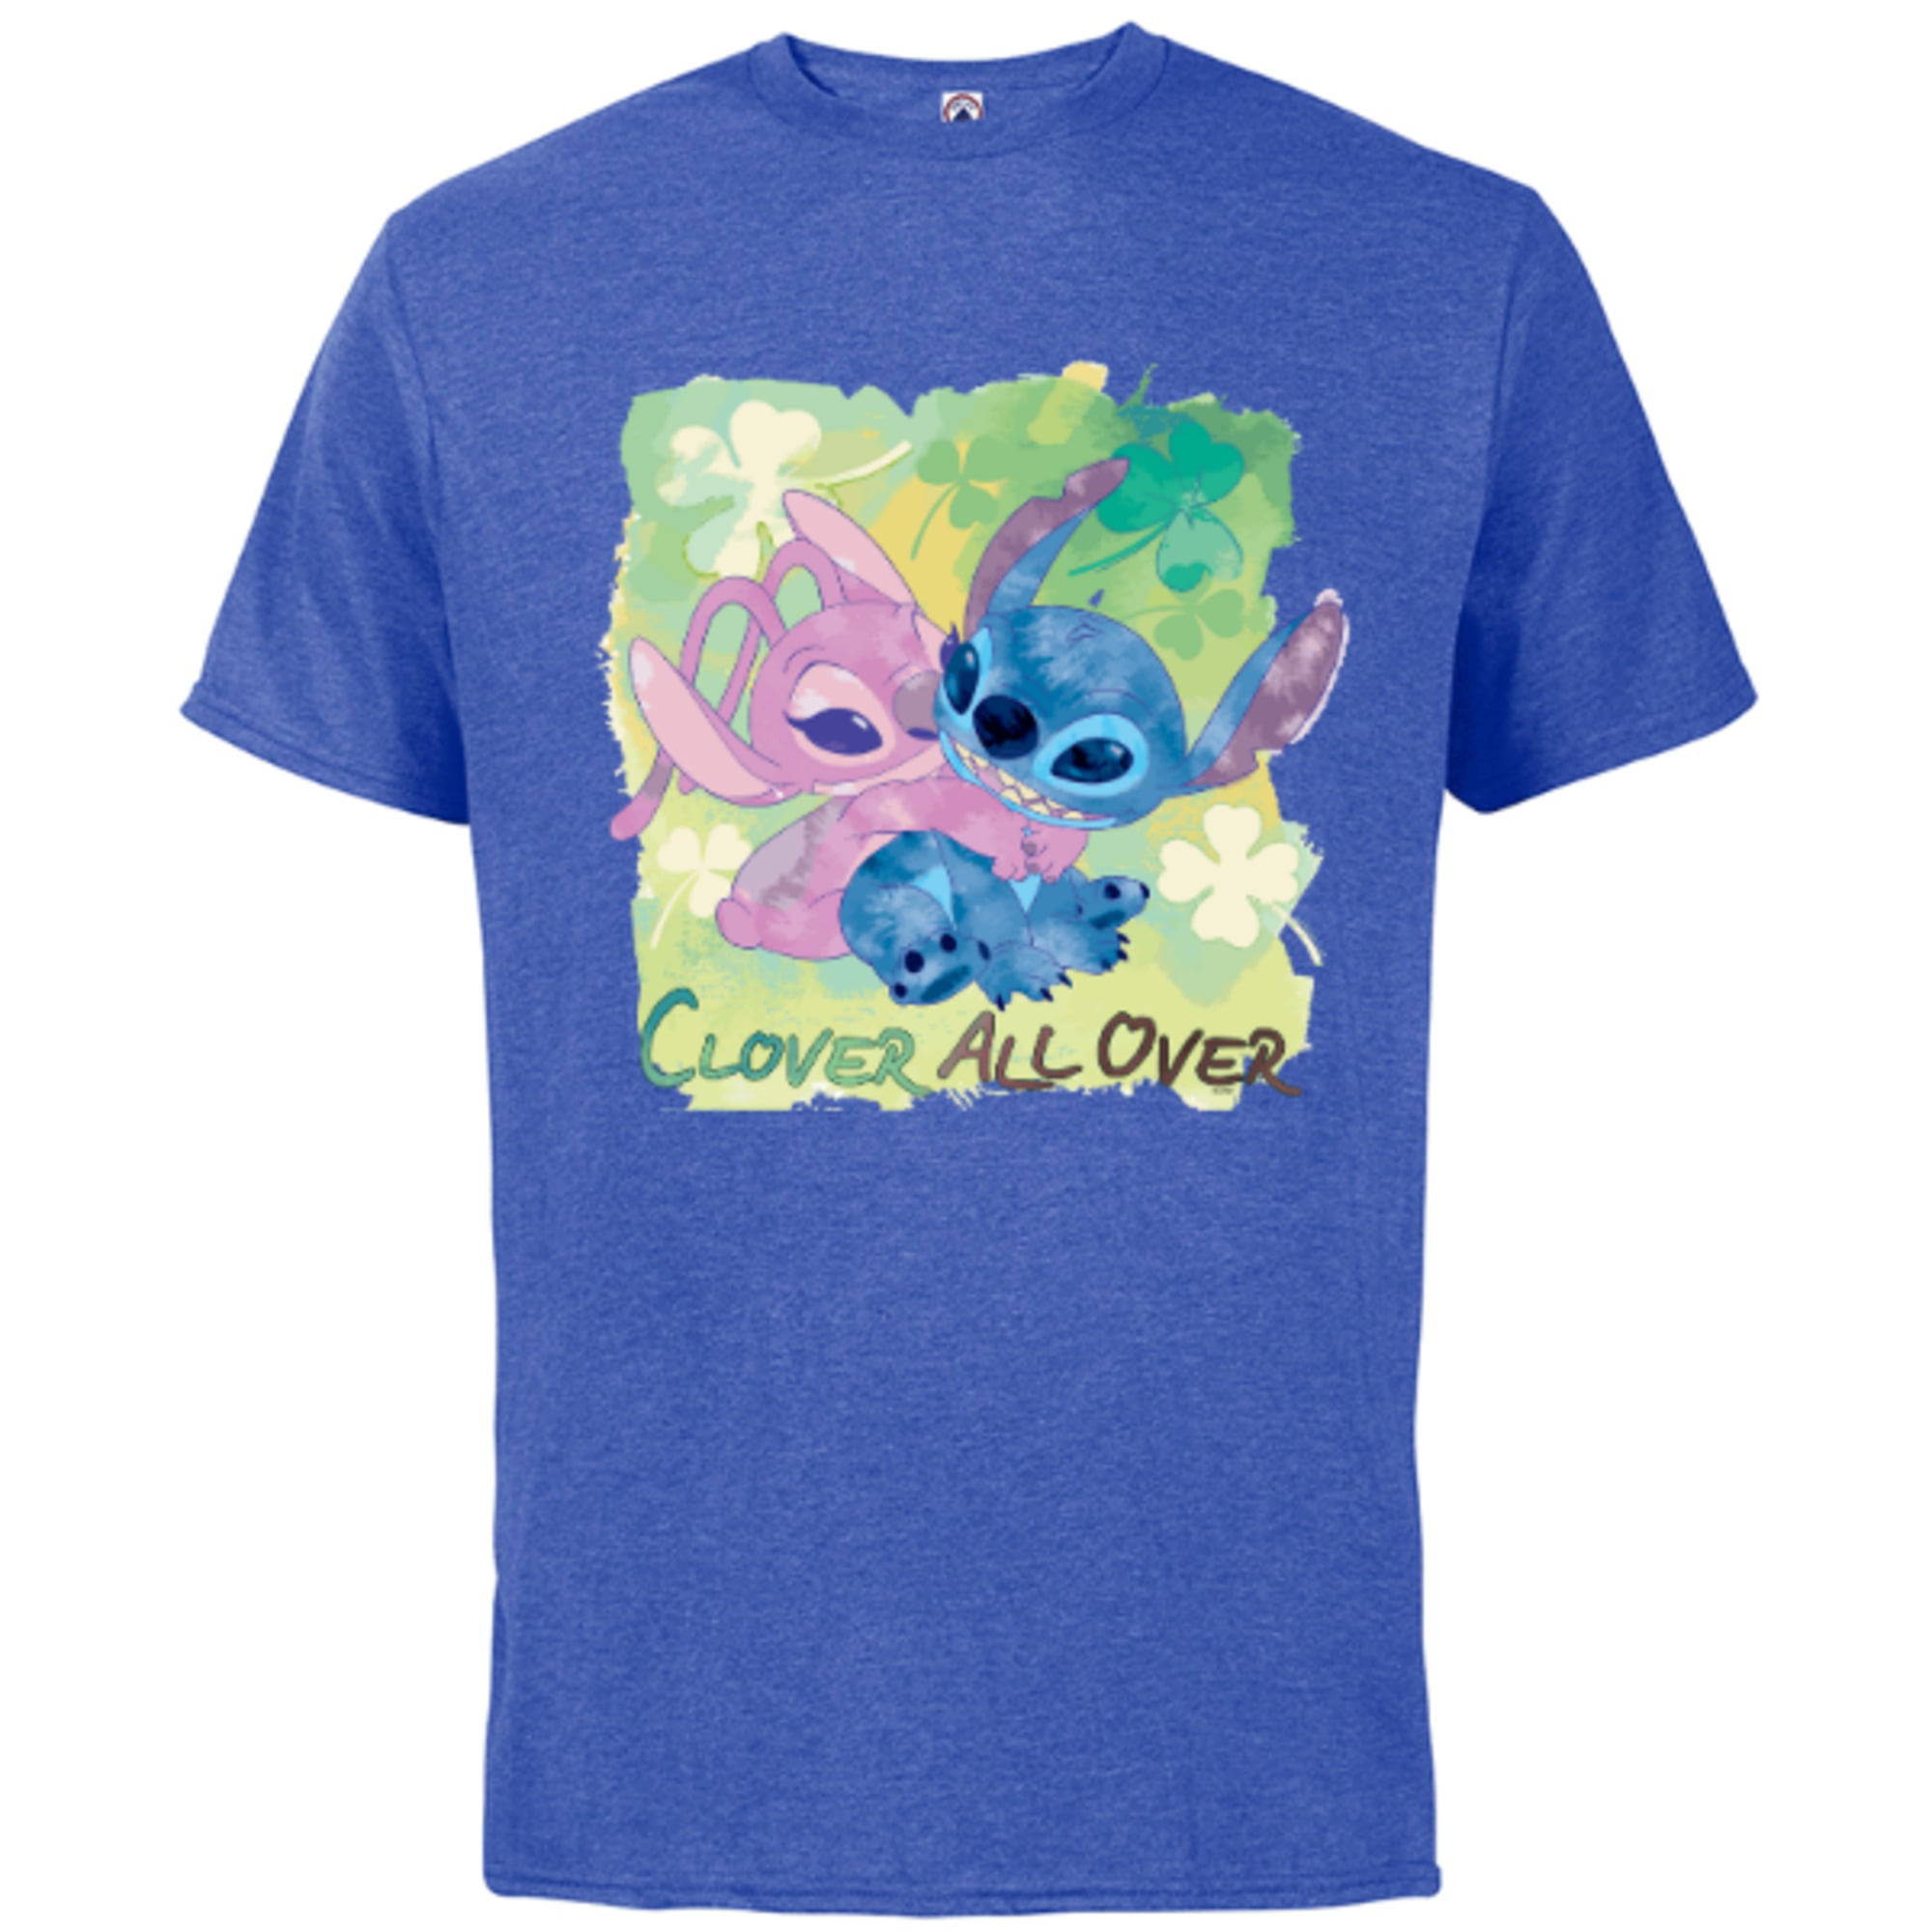 Dazzling Stitch Shirt, Sunflower Shirt, Disney Shirt, Stitch Kids